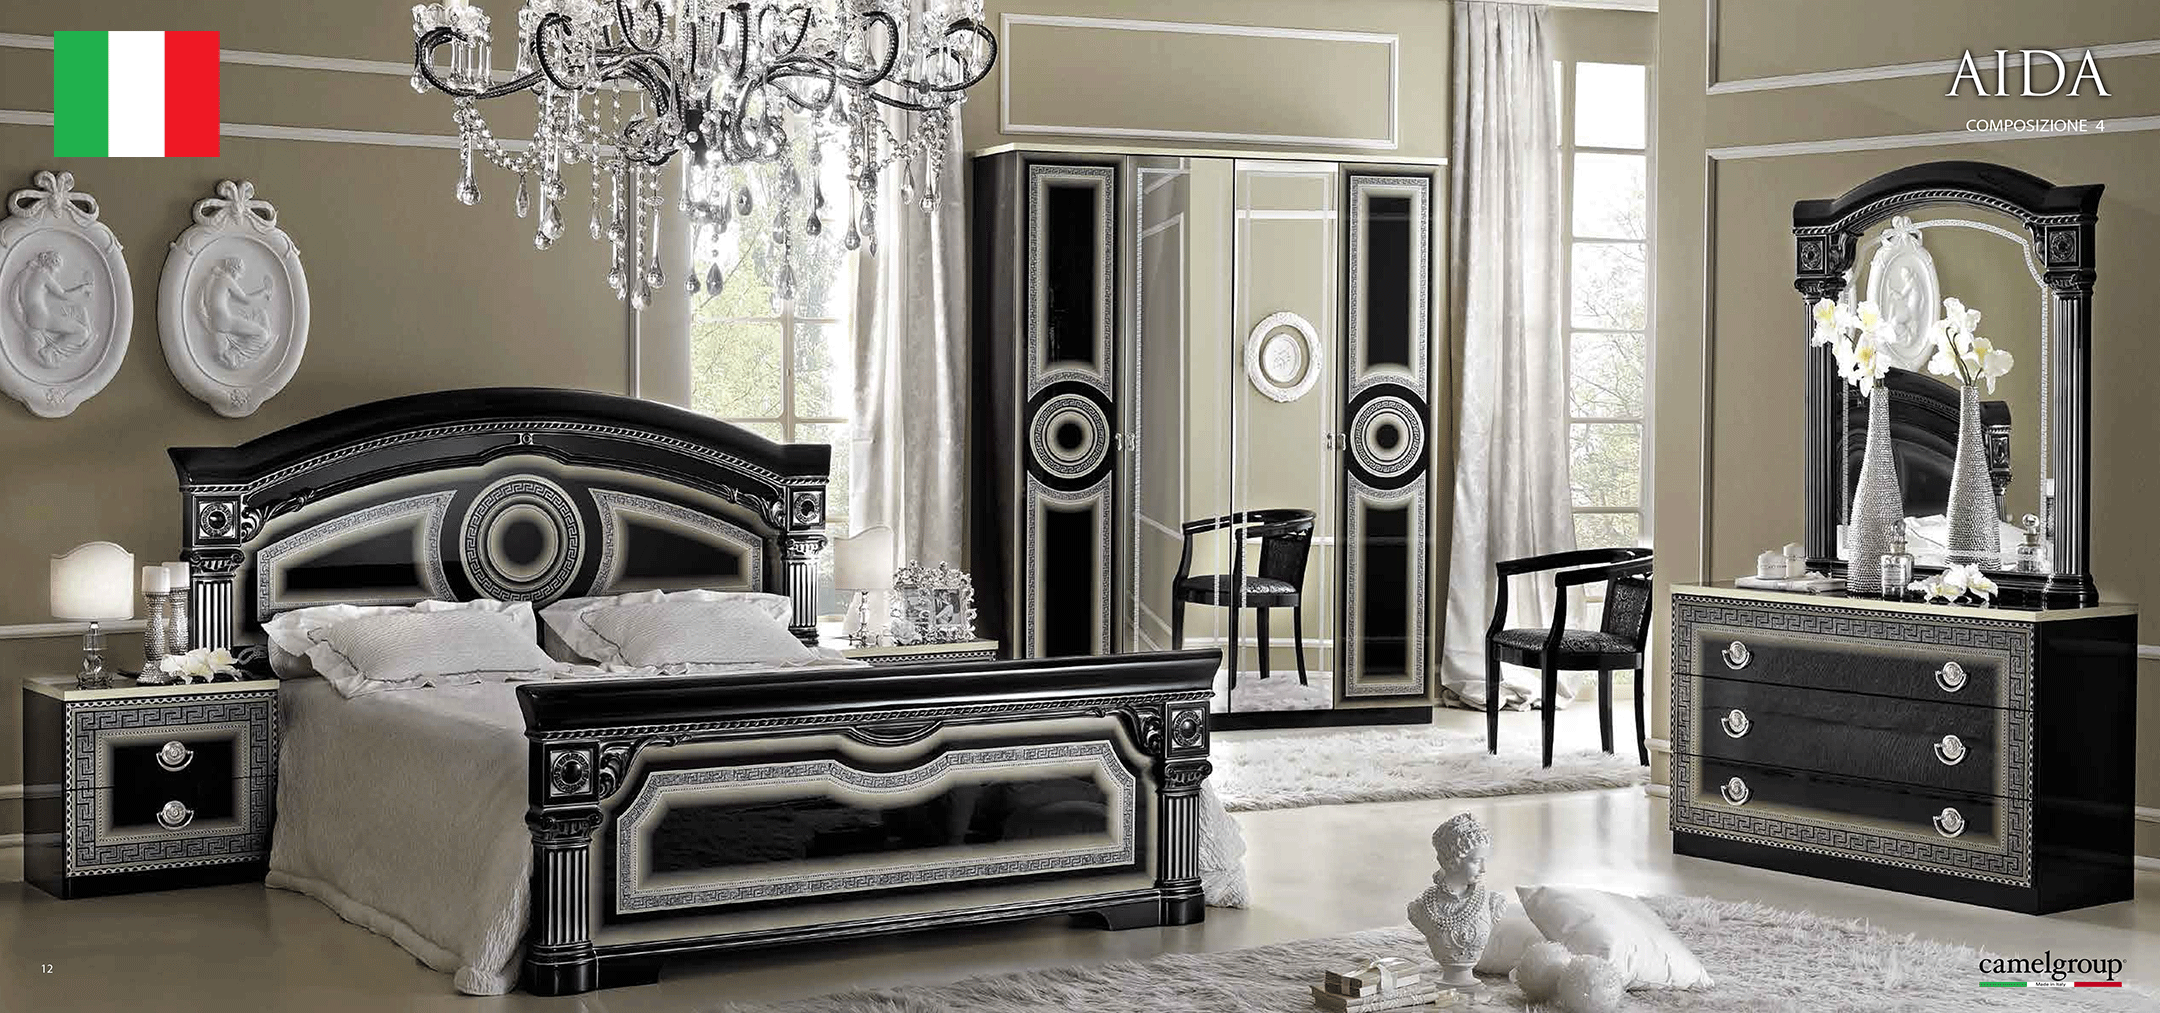 Brands Camel Modum Collection, Italy Aida Bedroom Black/Silver, Camelgroup Italy